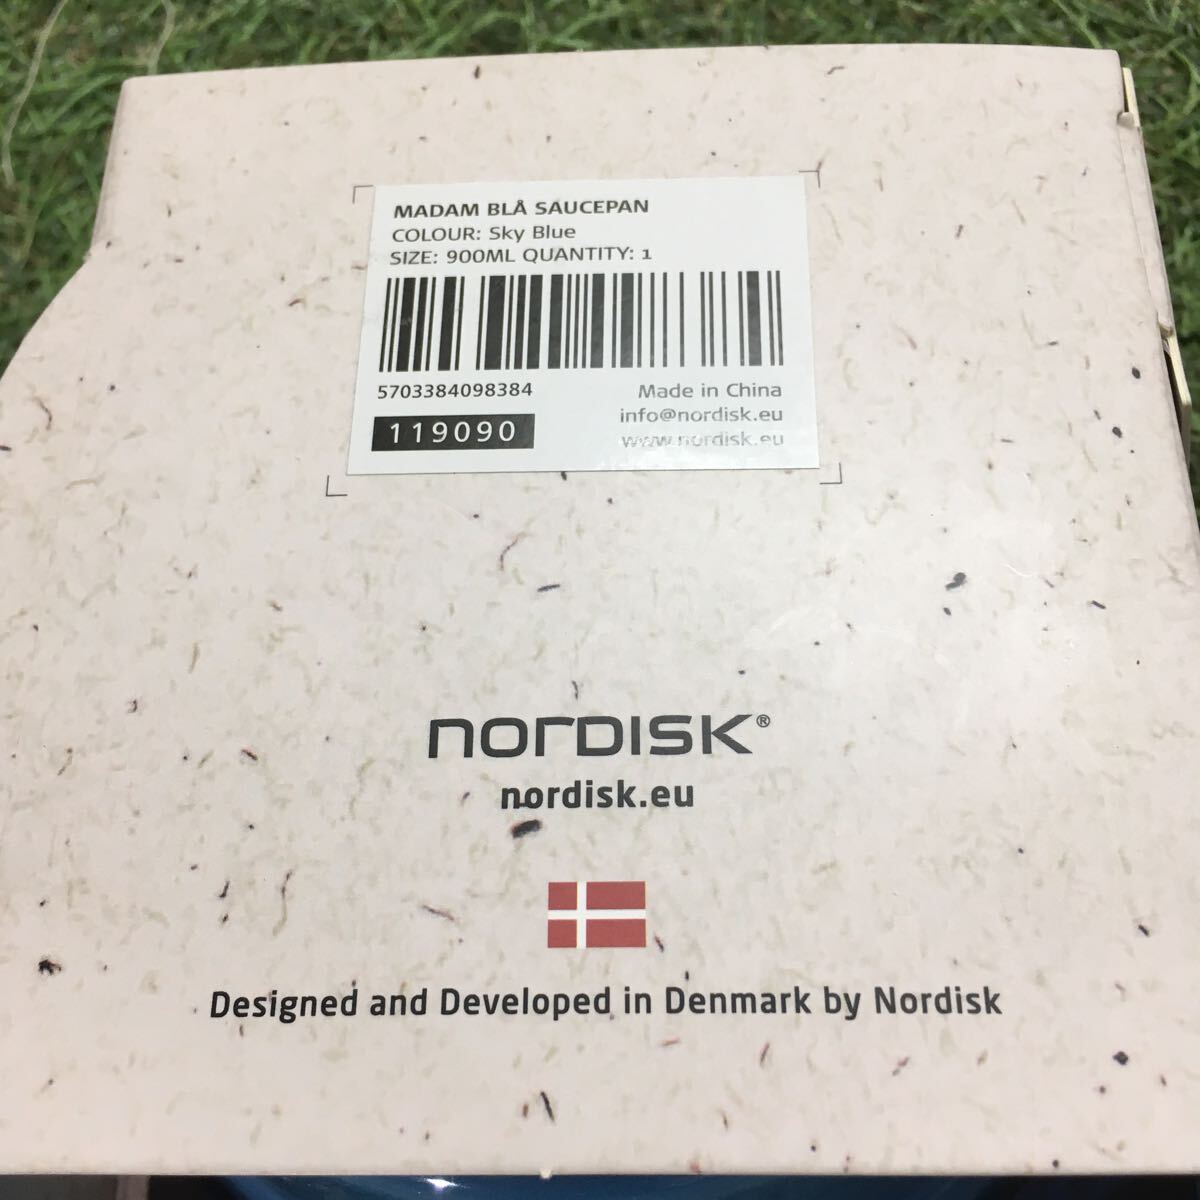 GX1780 NORDISK ノルディスク 119090 マダムブロー ソースパン 900ml スカイ キャンプ アウトドア 北欧 未使用 保管品 アウトドア用品の画像5